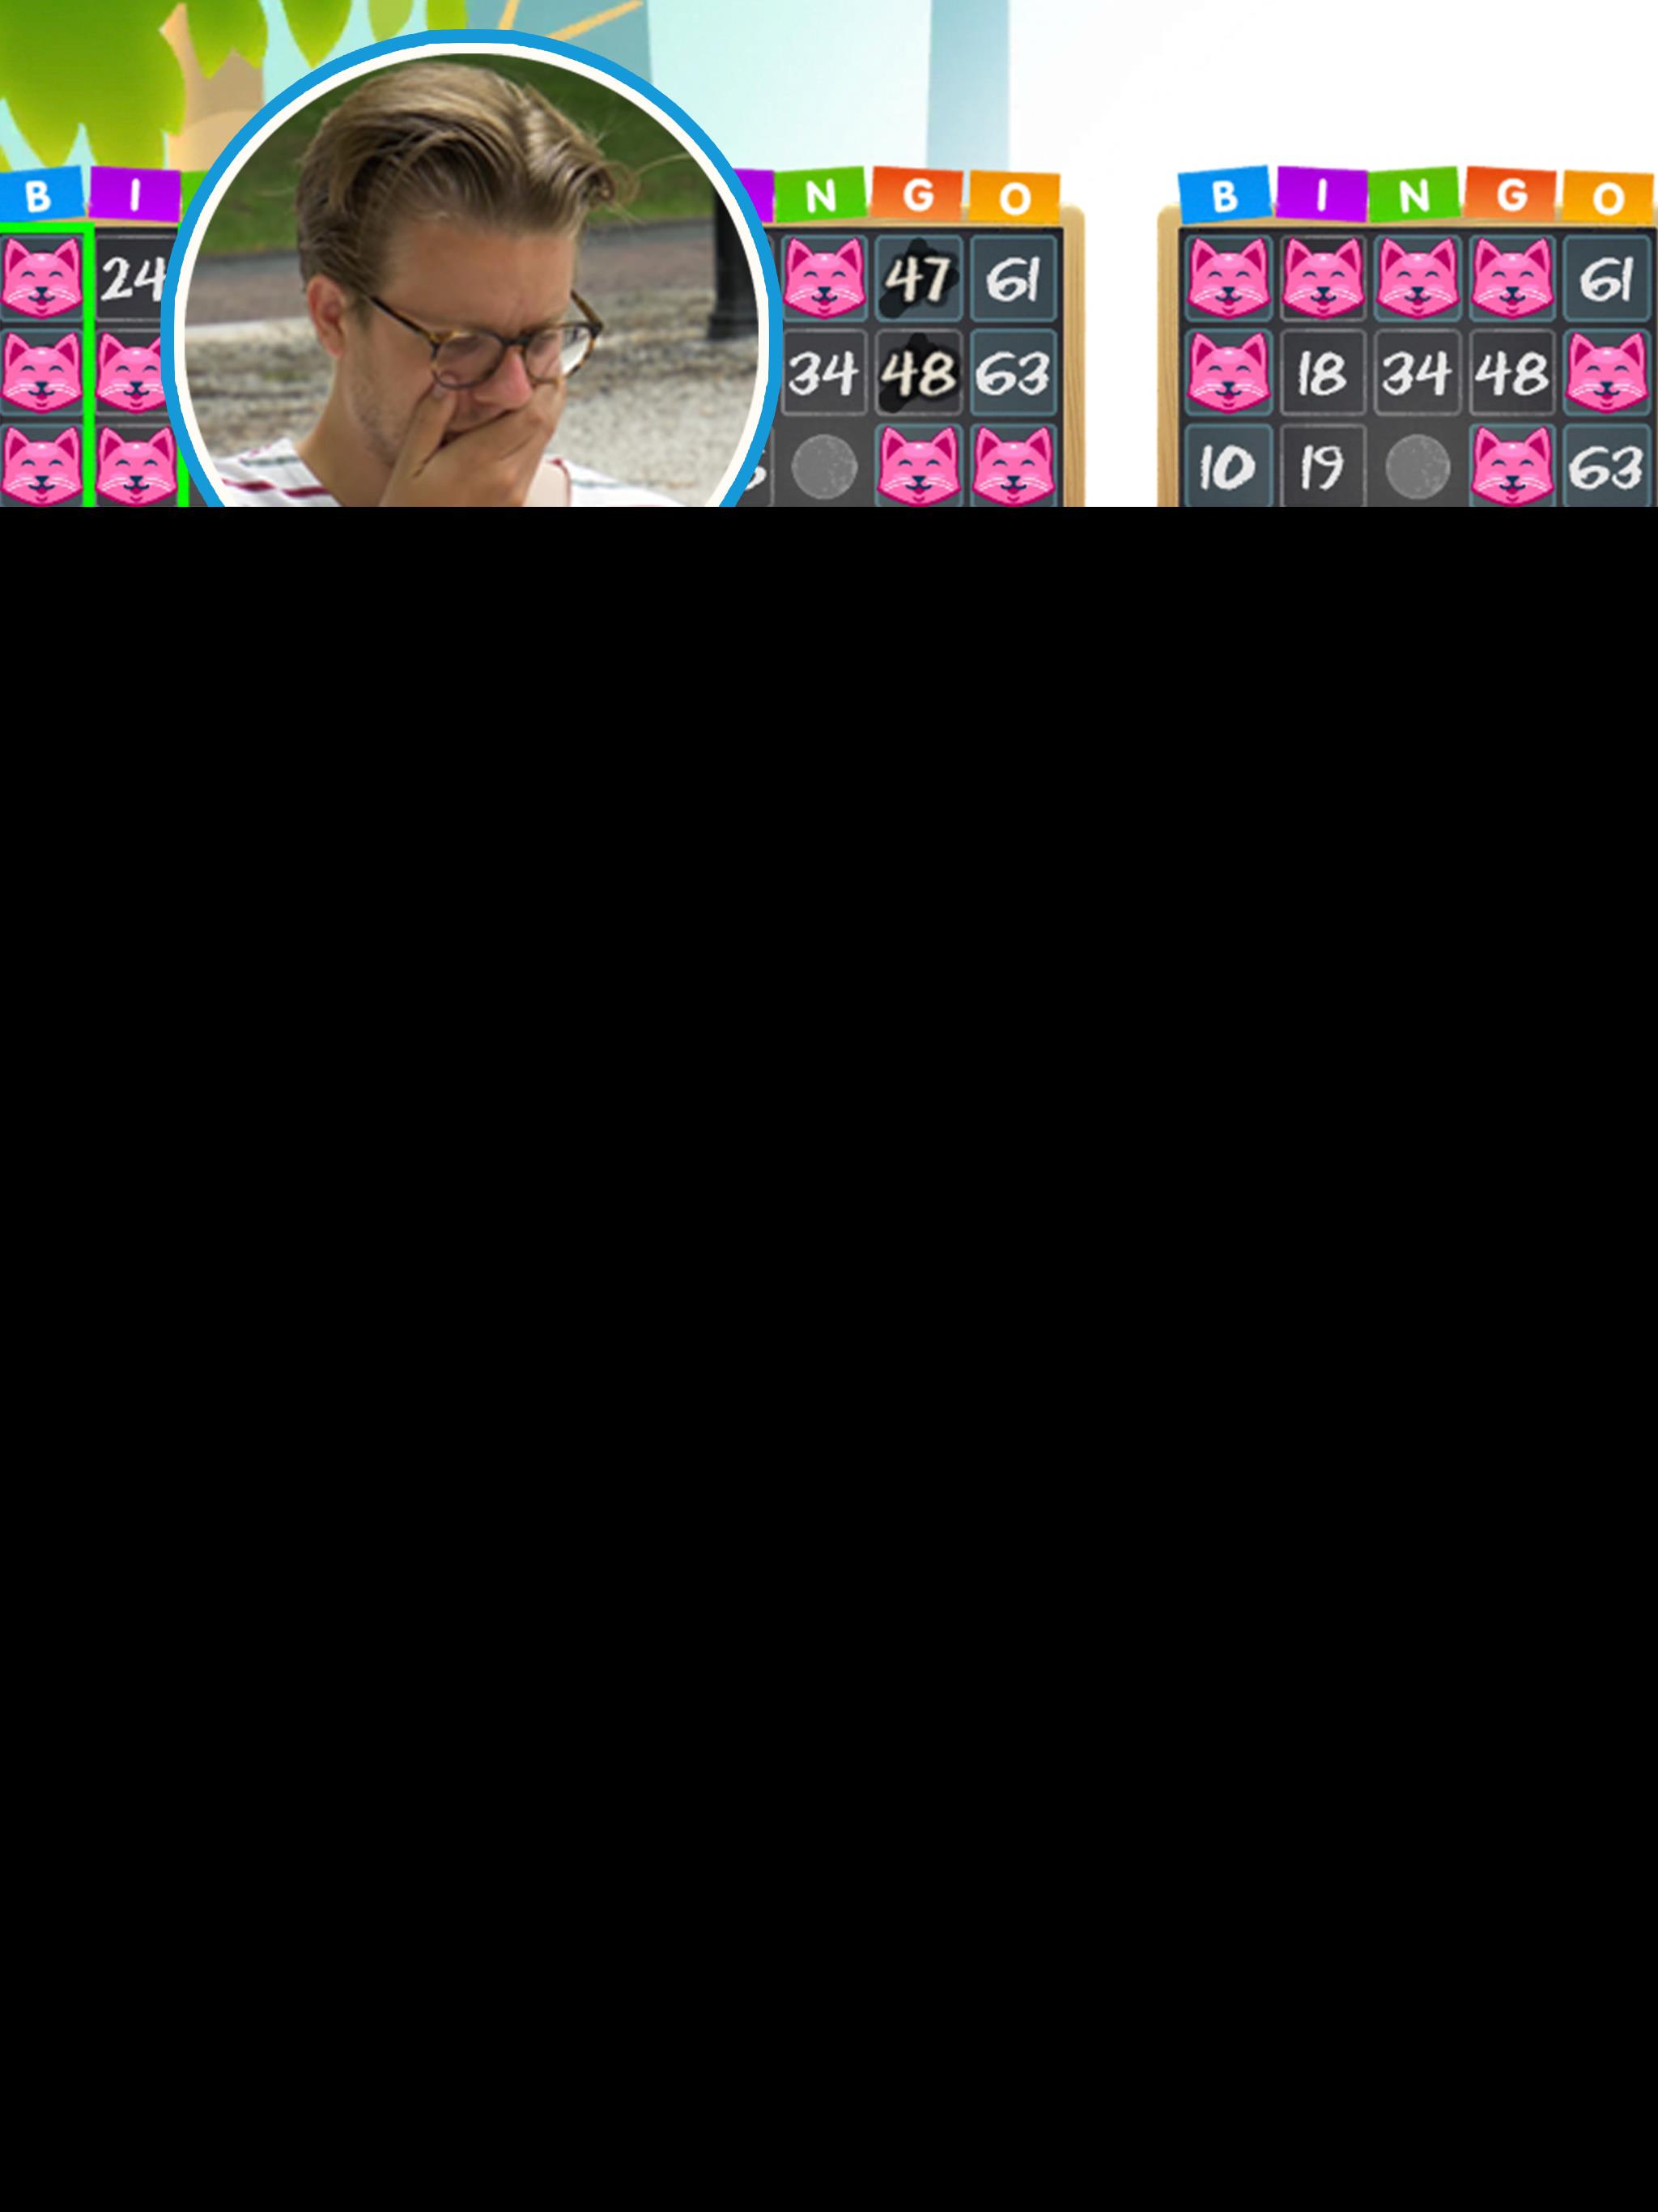 GamePoint Bingo - Bingo games Screenshot 17